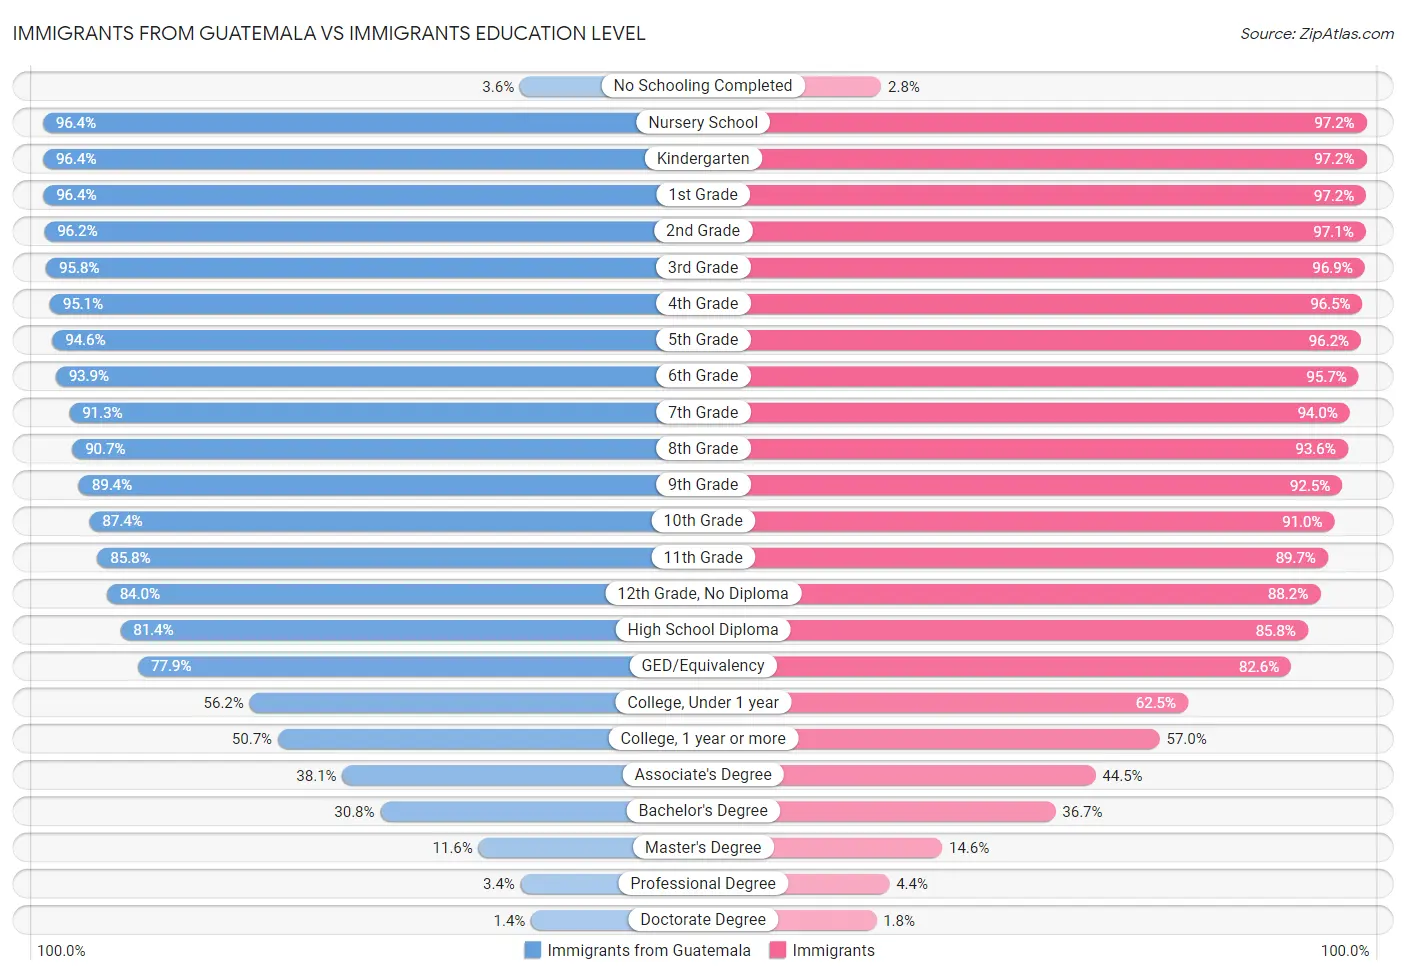 Immigrants from Guatemala vs Immigrants Education Level